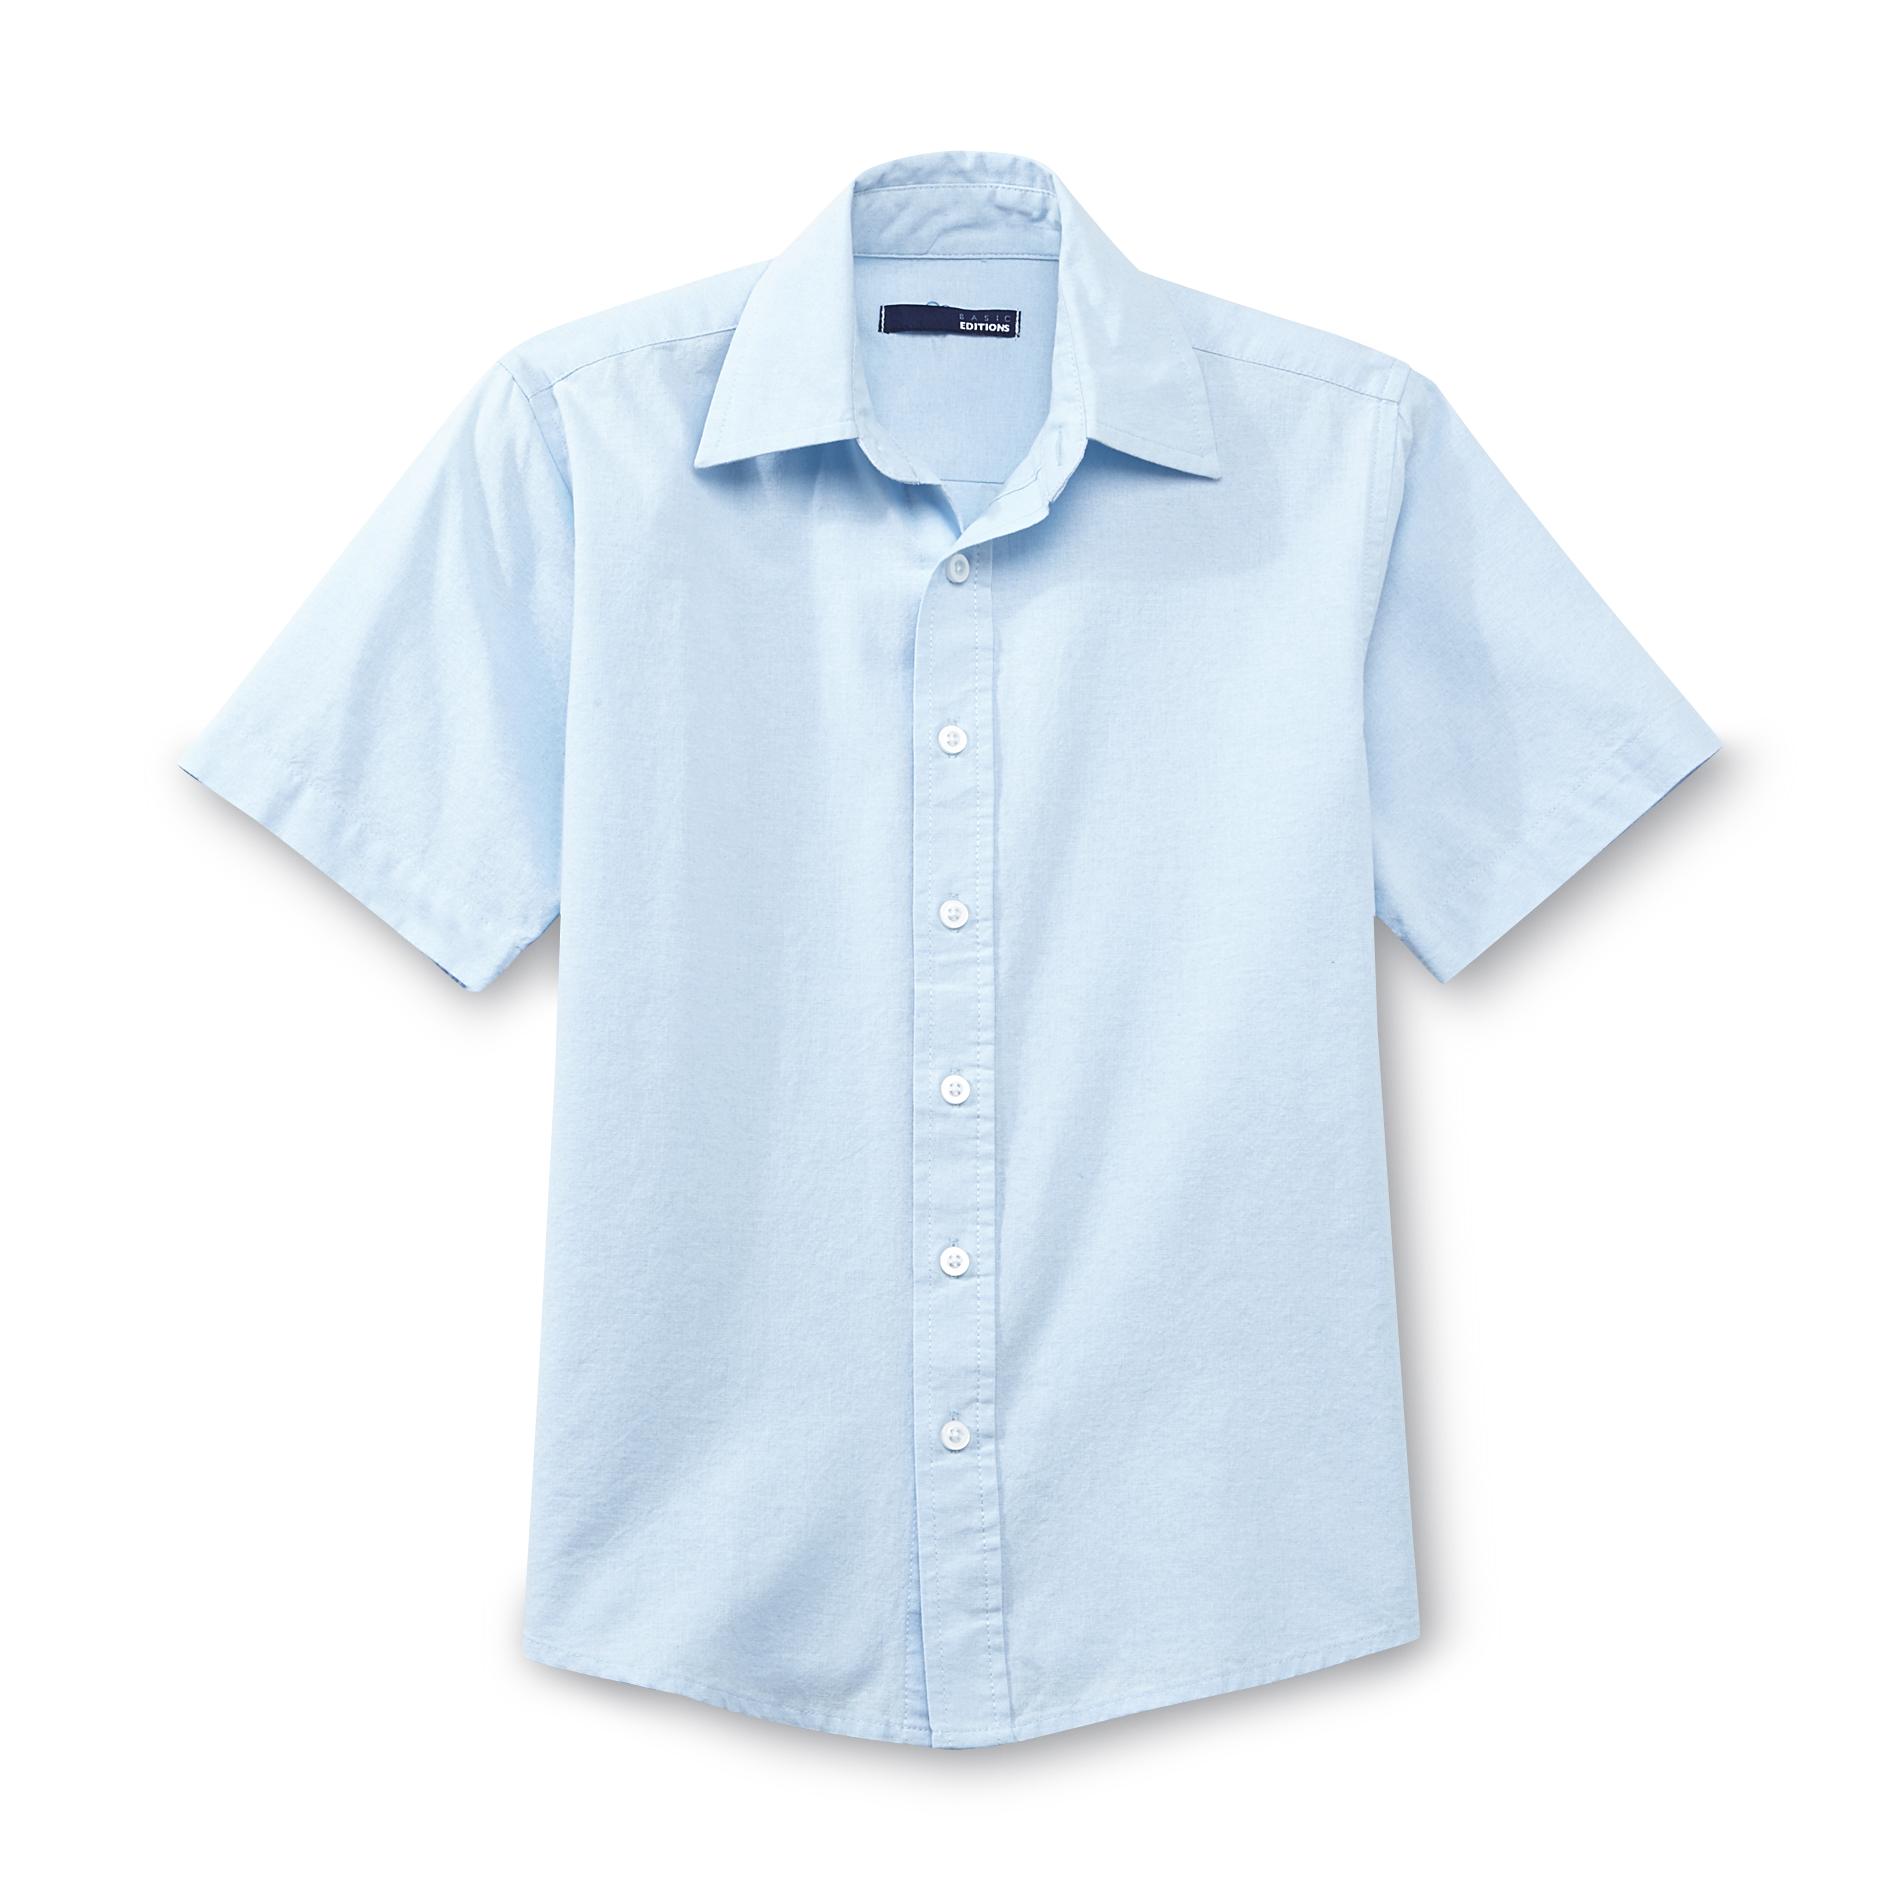 Basic Editions Boy's Oxford Dress Shirt